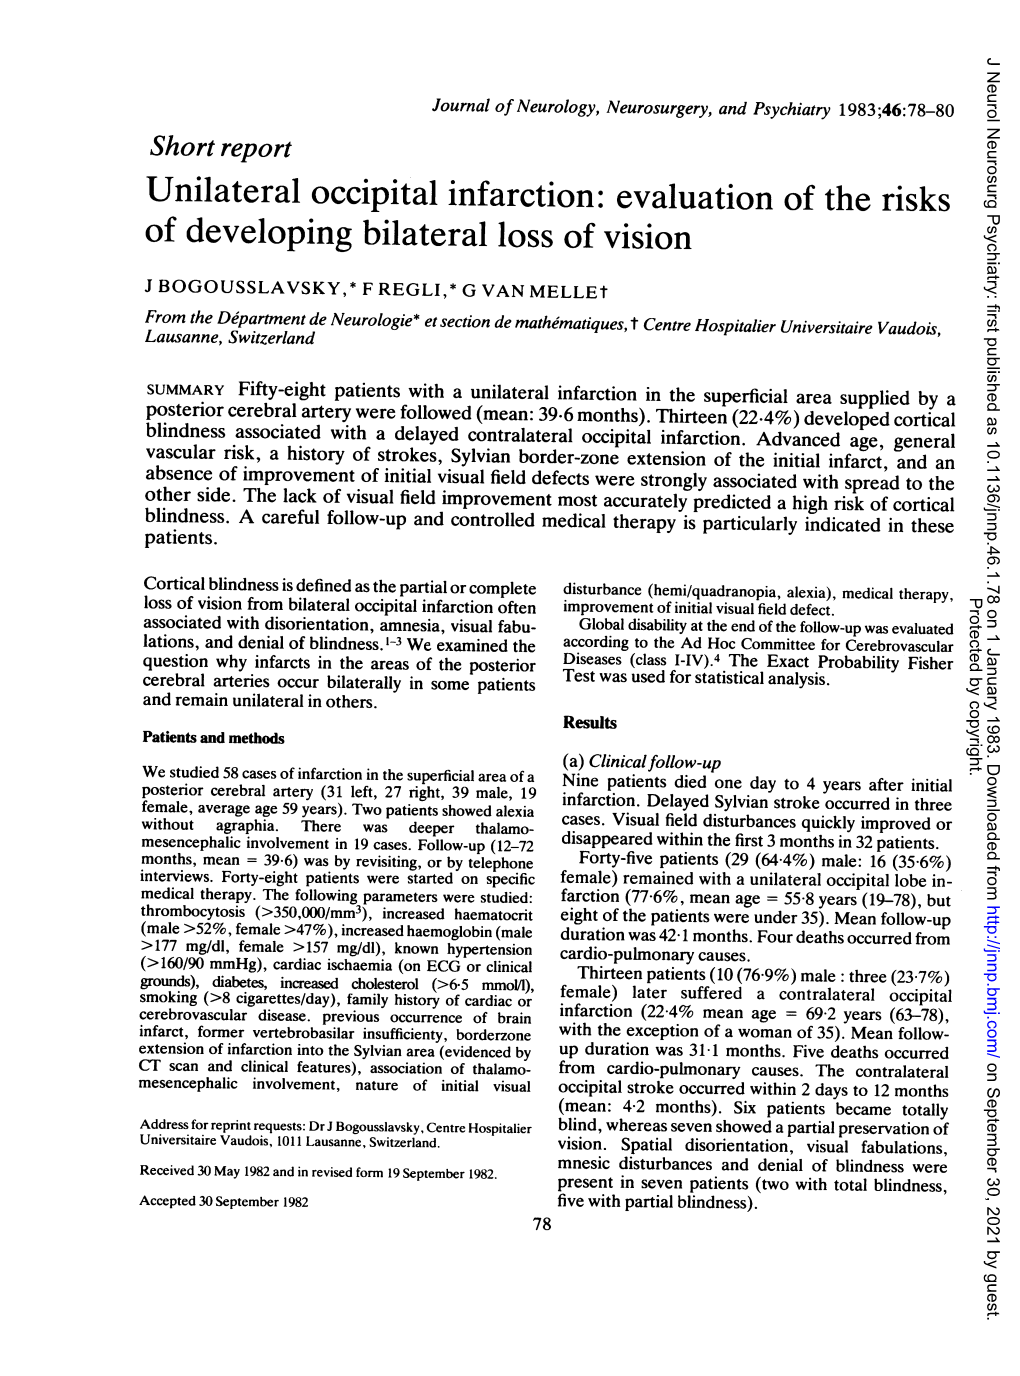 Of Developing Bilateral Loss of Vision